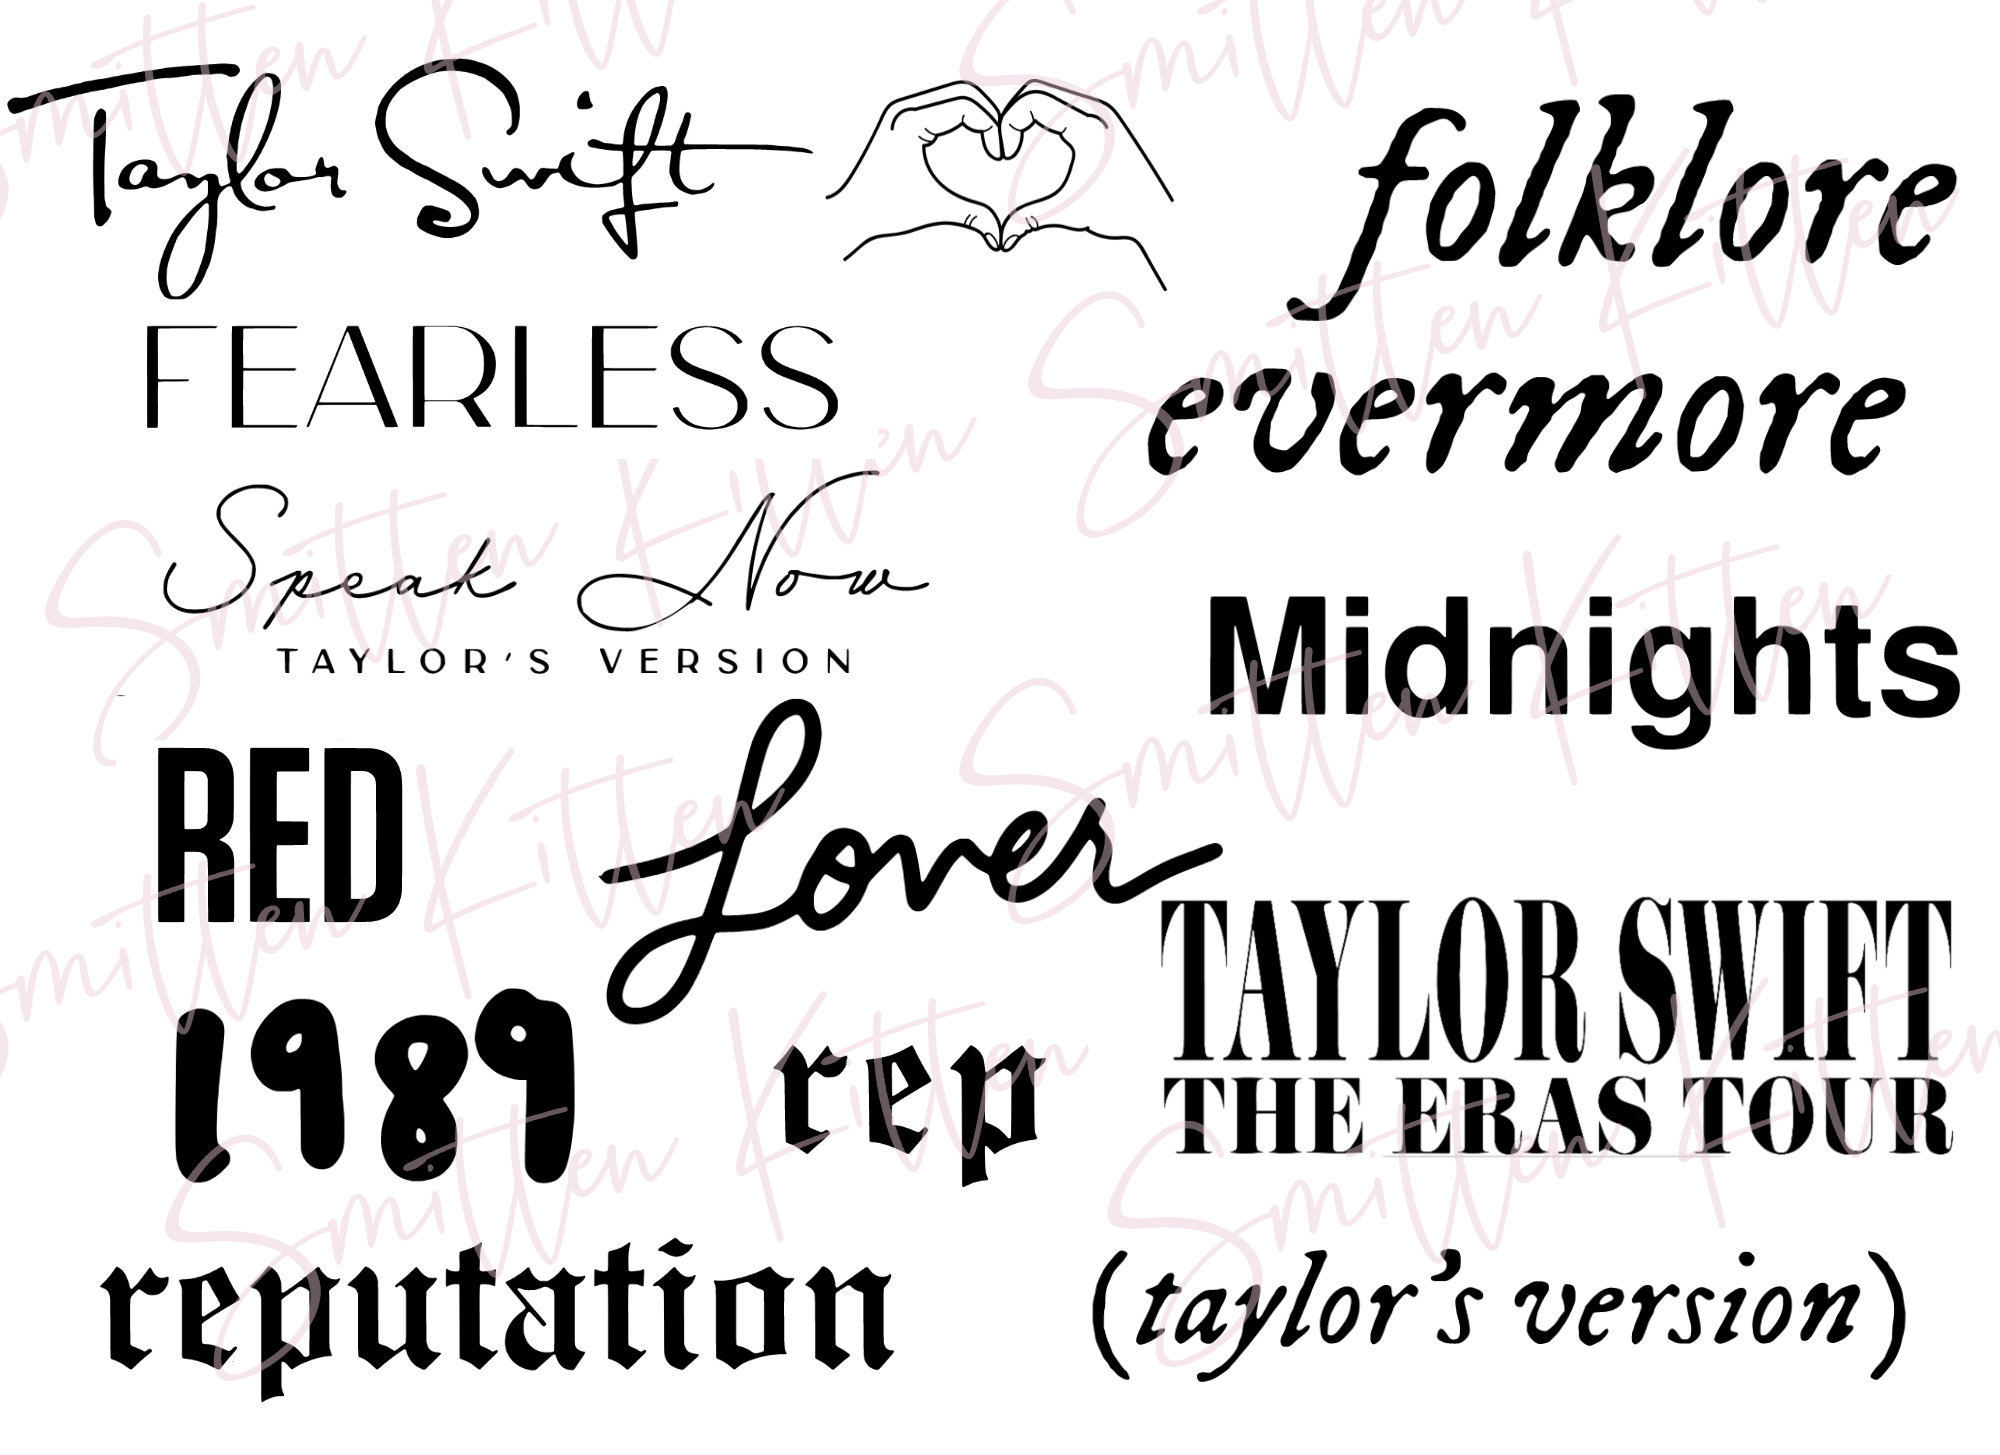 Taylor Swift Font Images Speak Now Lover Midnights - Etsy UK